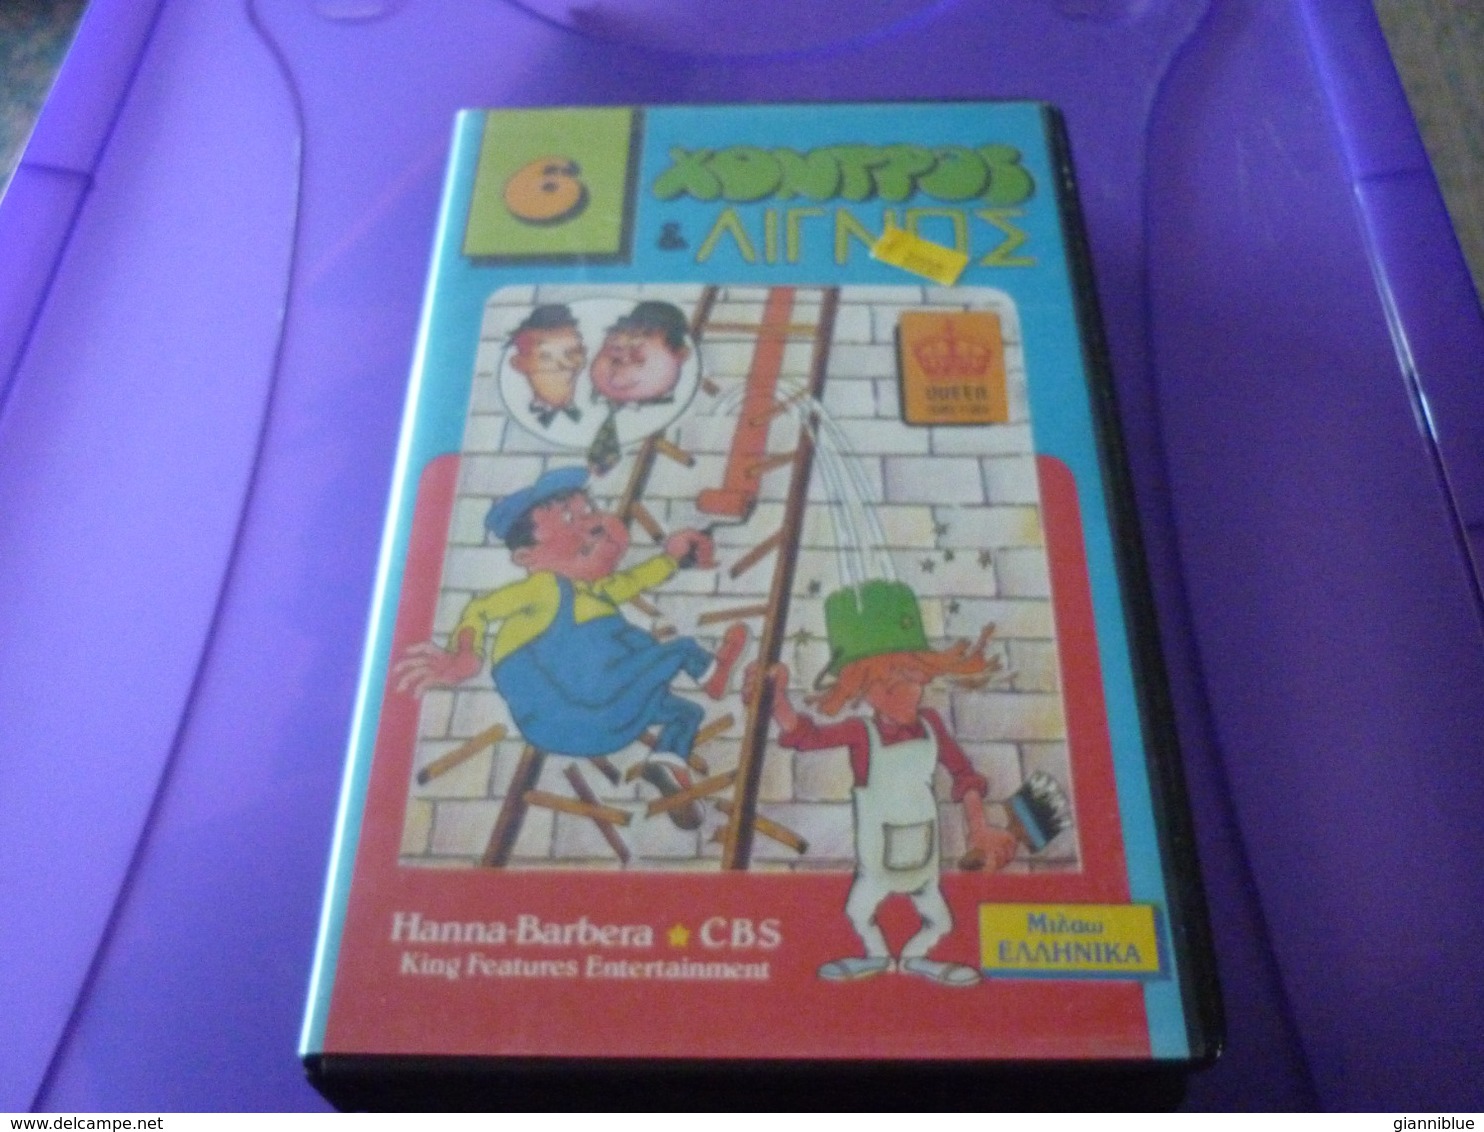 Laurel And Hardy Old Greek Vhs Tape Cassette From Greece - Enfants & Famille